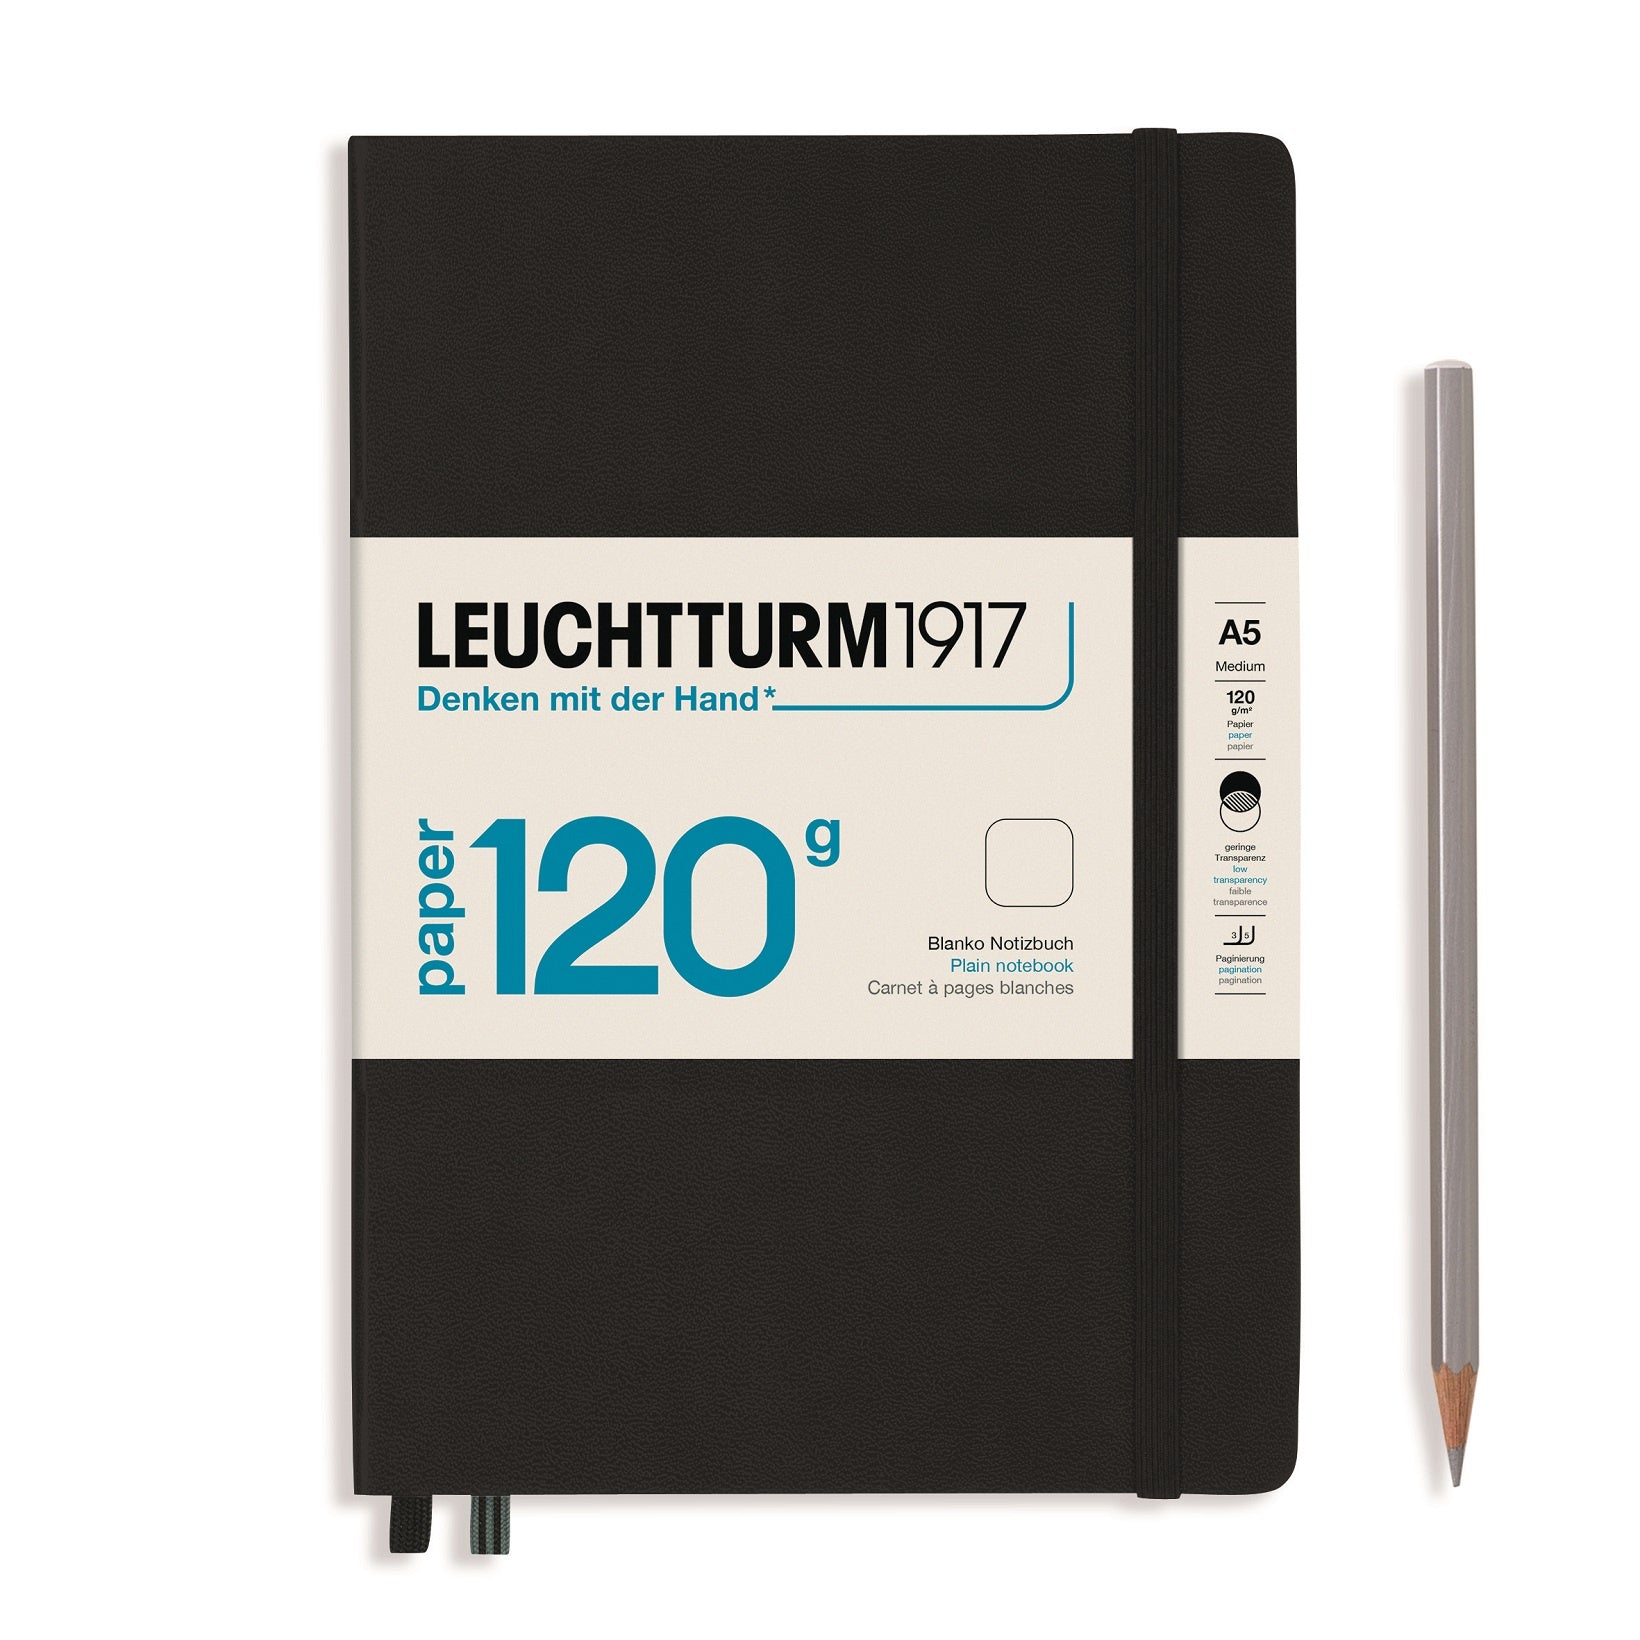 Leuchtturm1917 Notebook 120g Edition Medium (A5) Plain Black - Pencraft the boutique